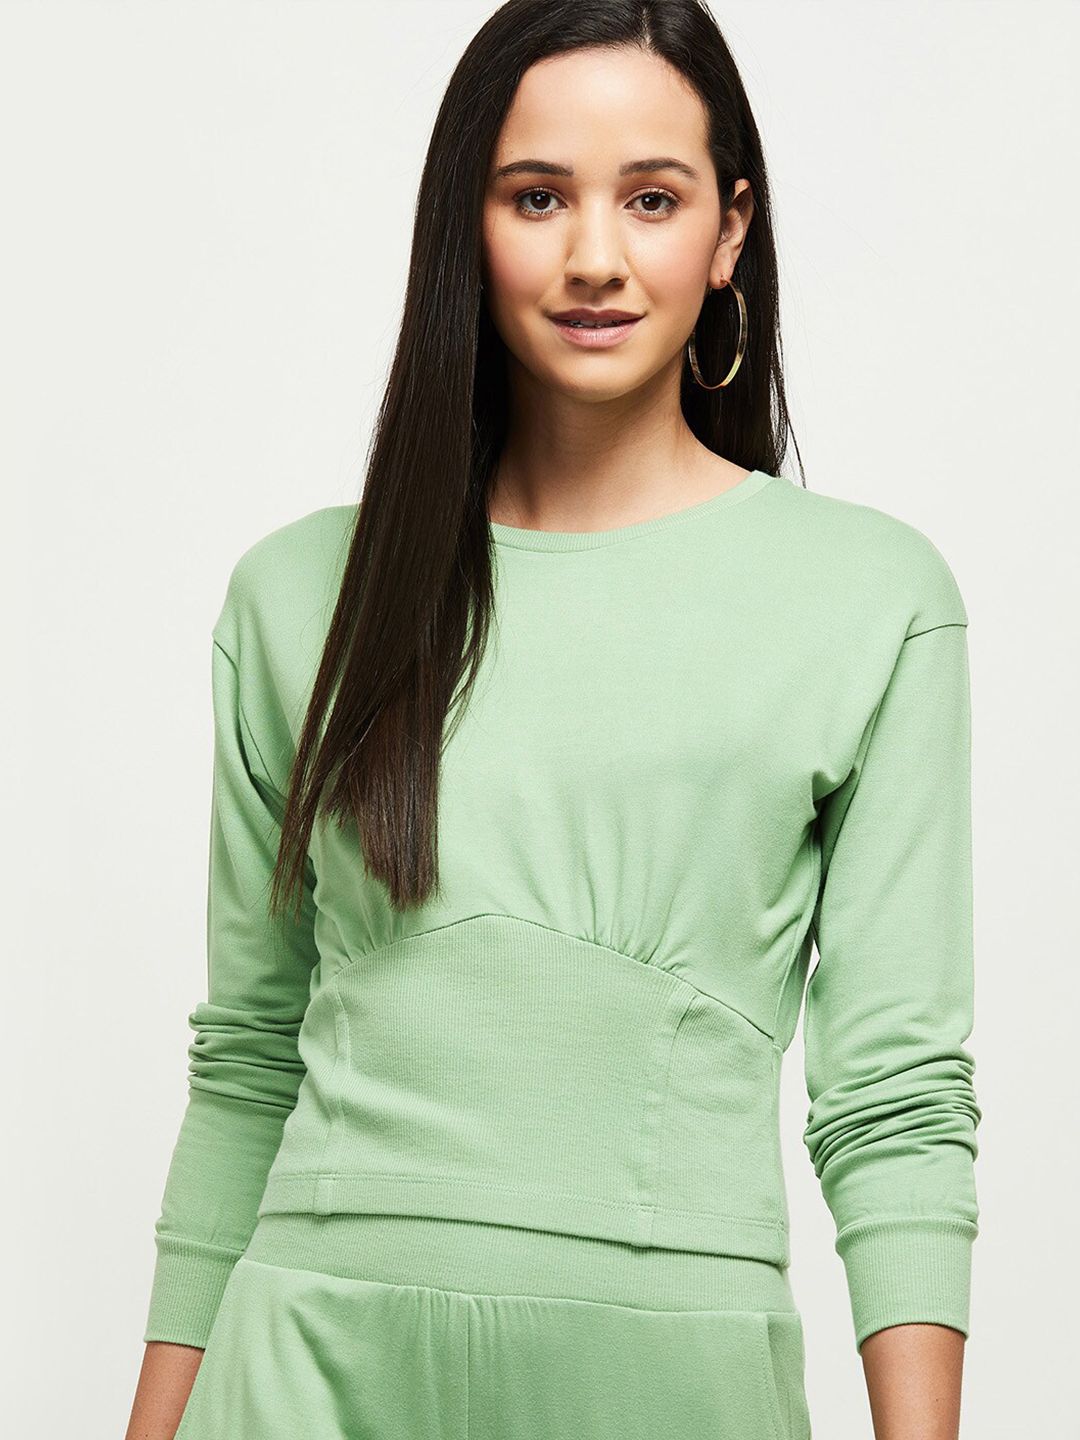 max Women Green Sweatshirt Price in India